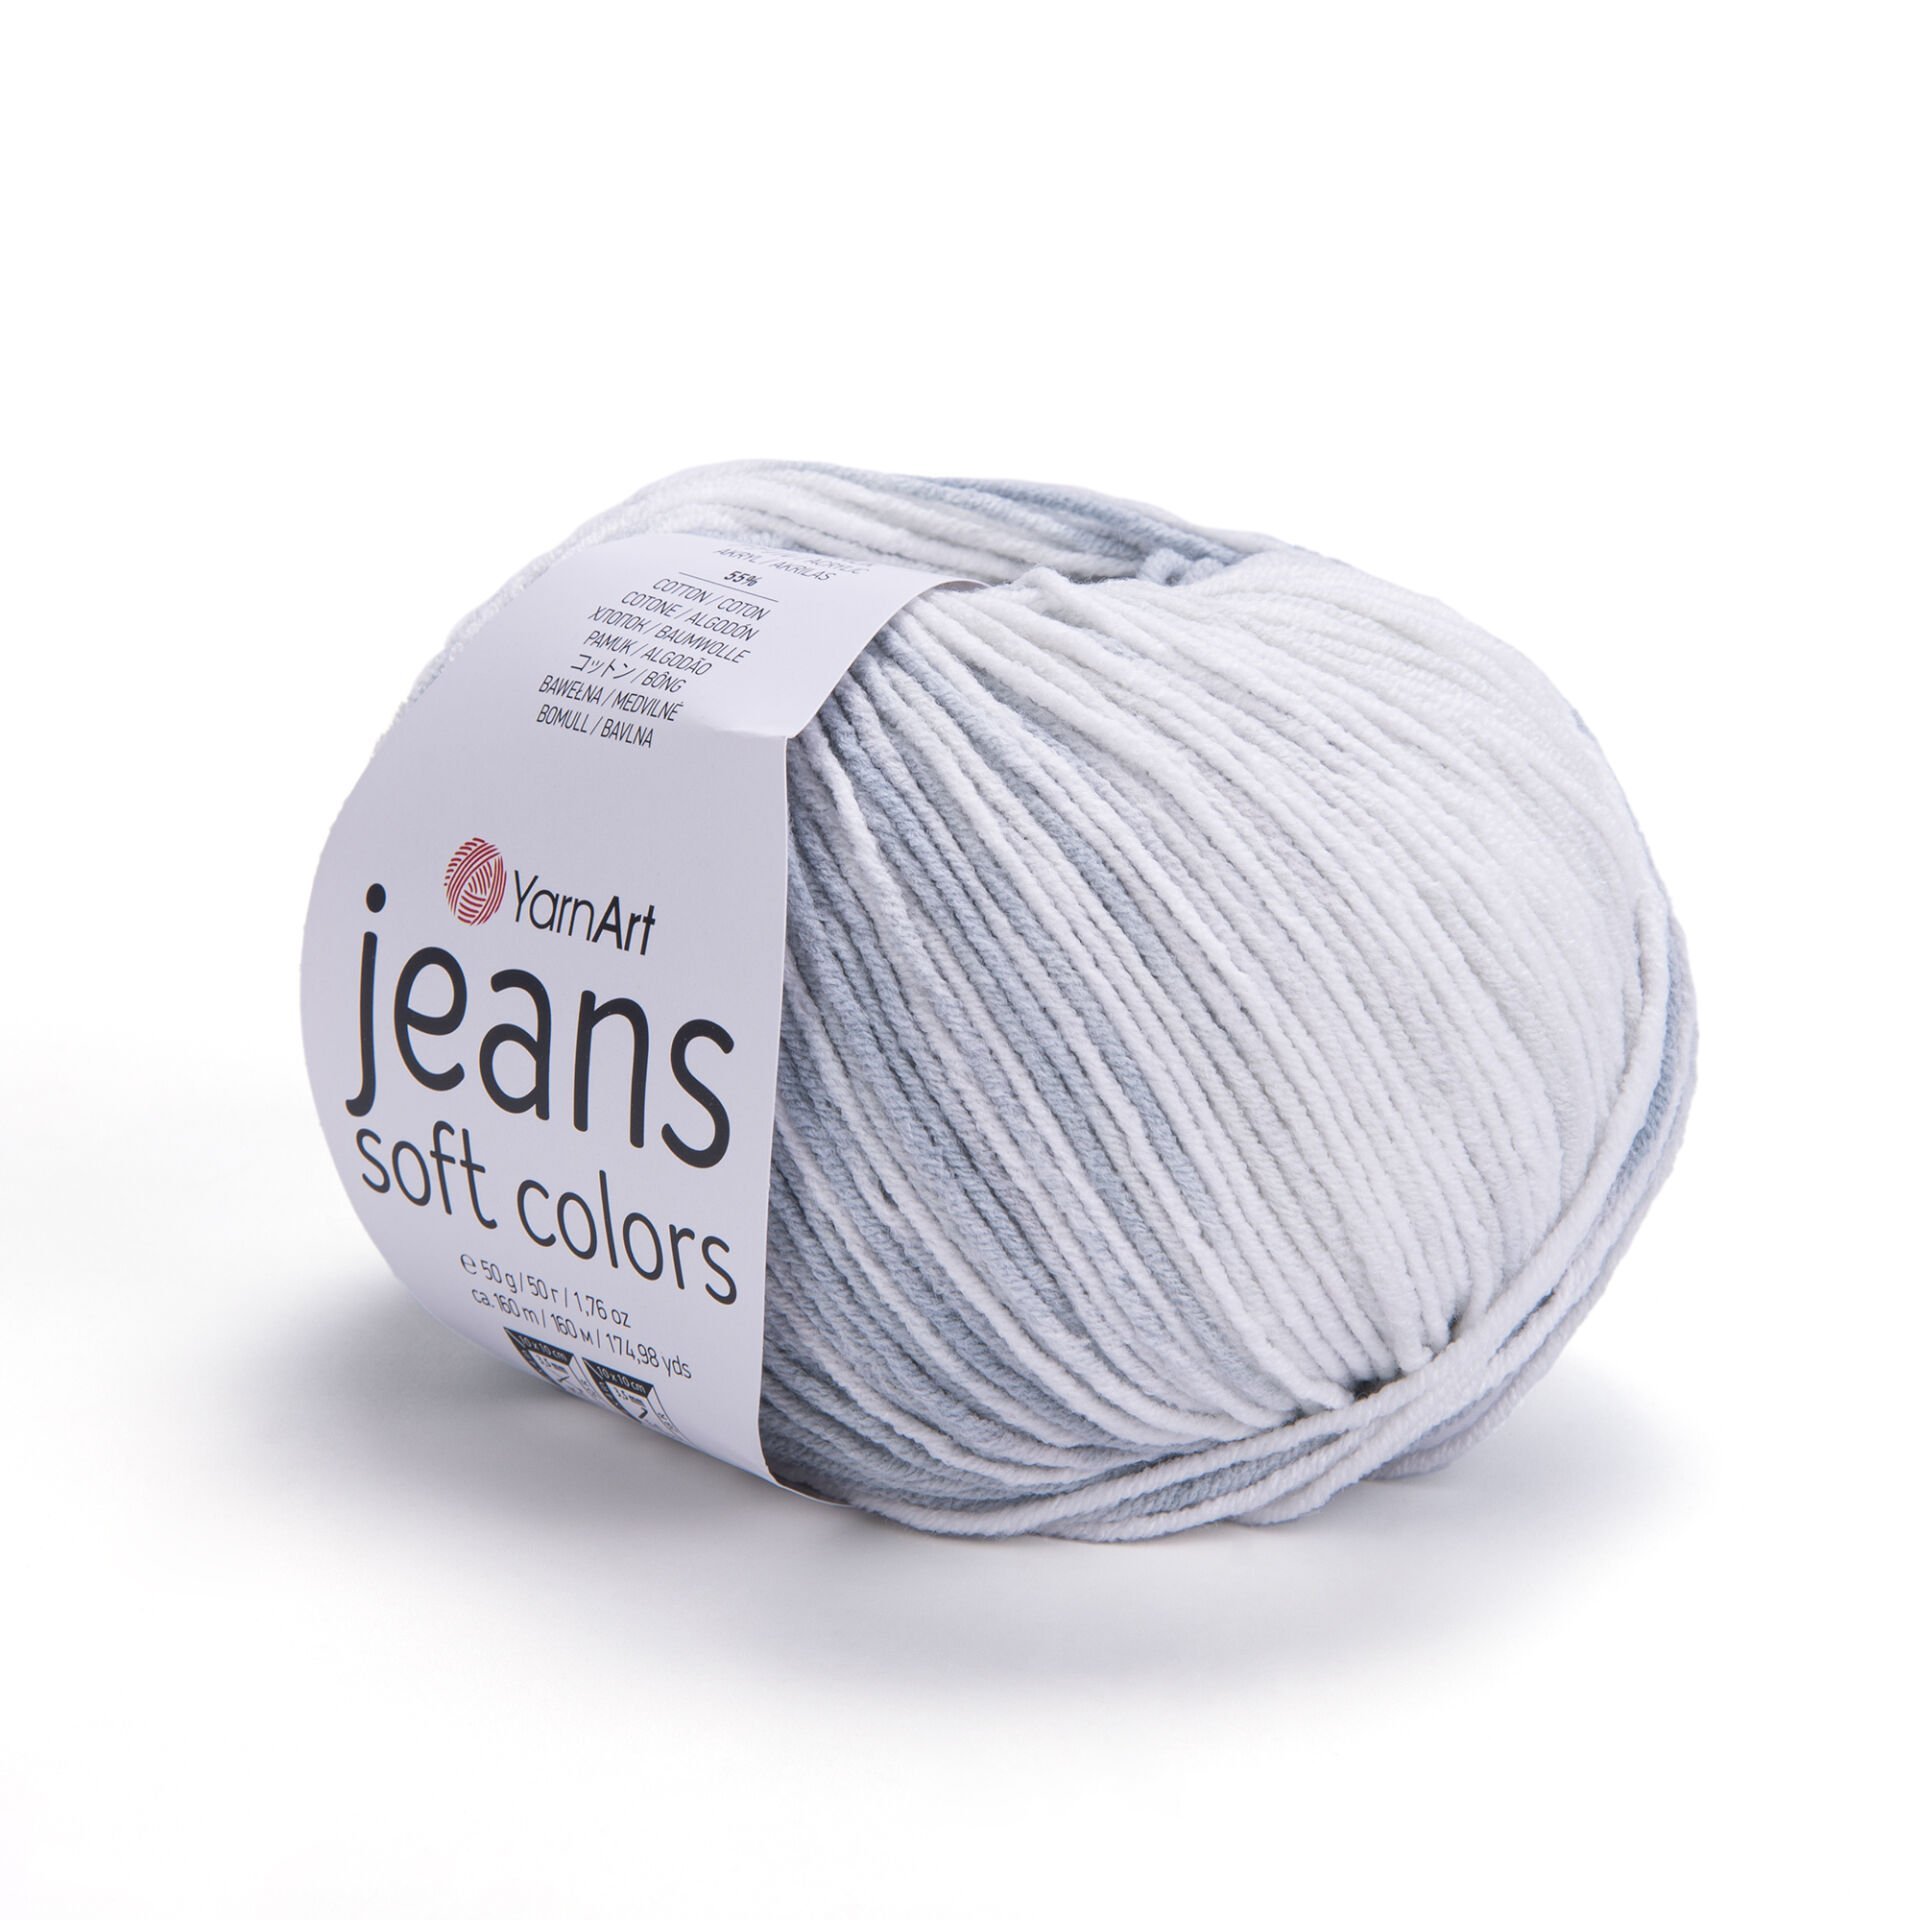 YarnArt Jeans Knitting Yarn, Grey - 80 - Hobiumyarns